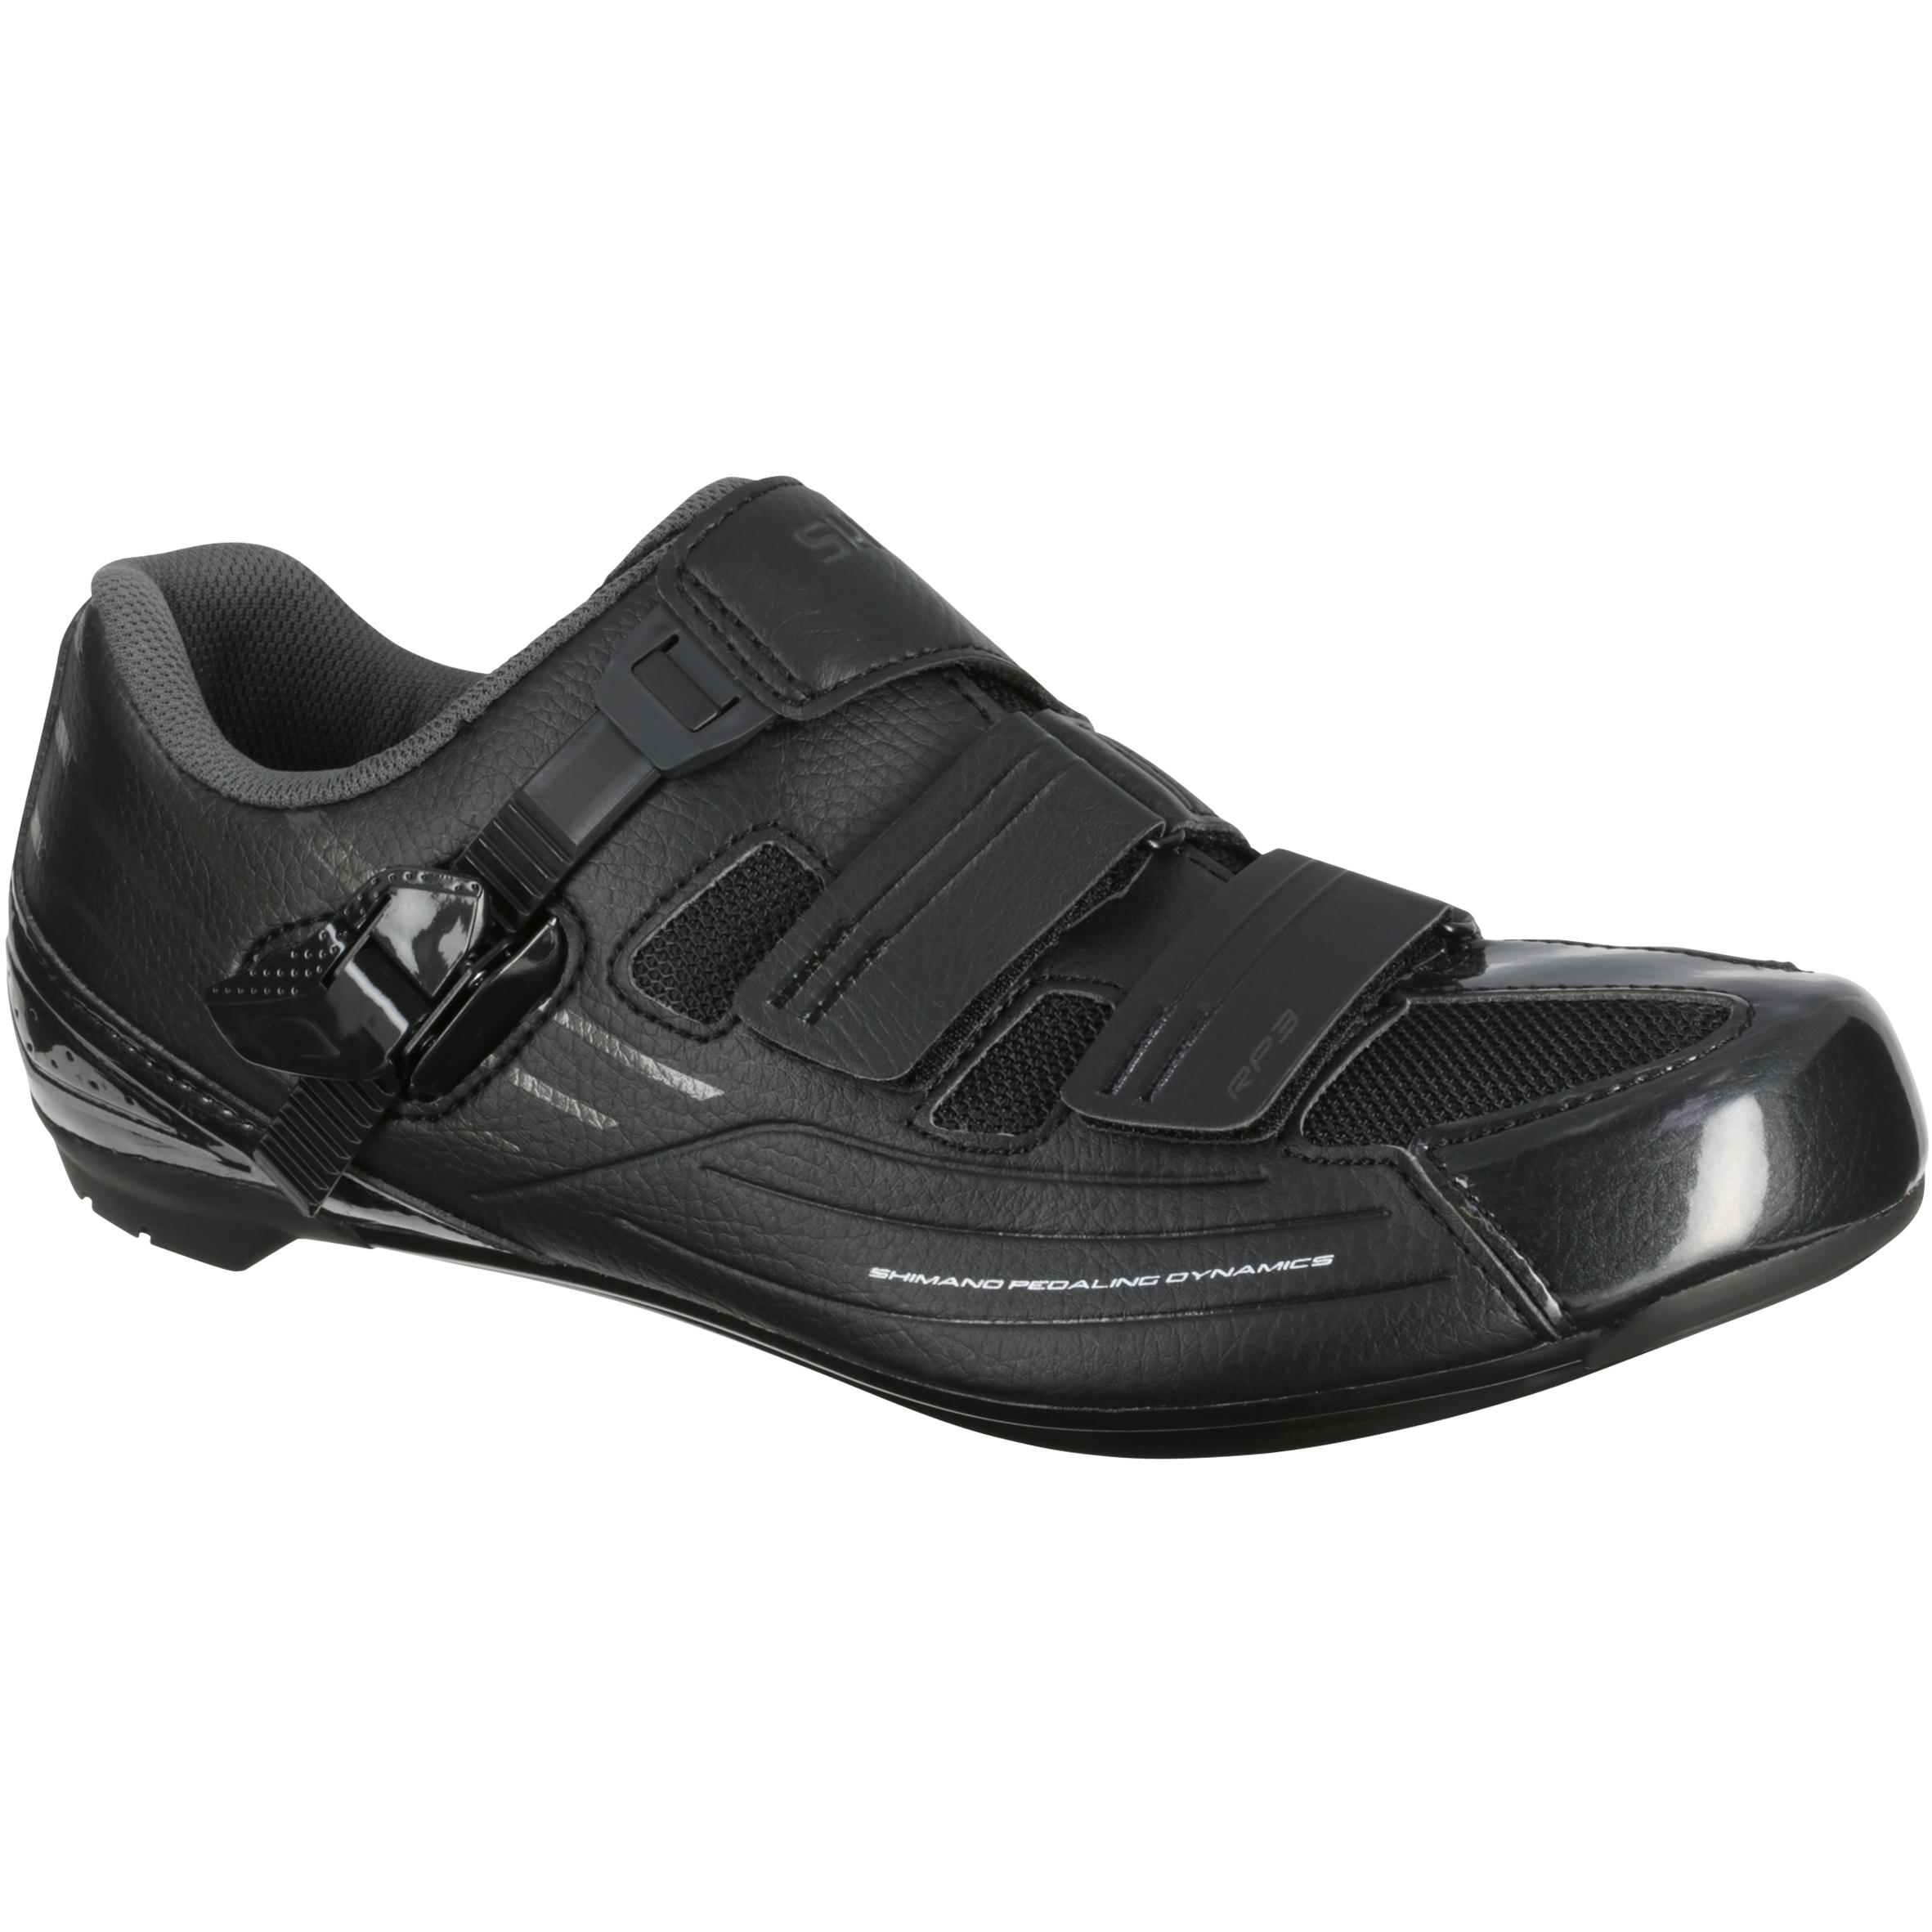 decathlon road bike shoes